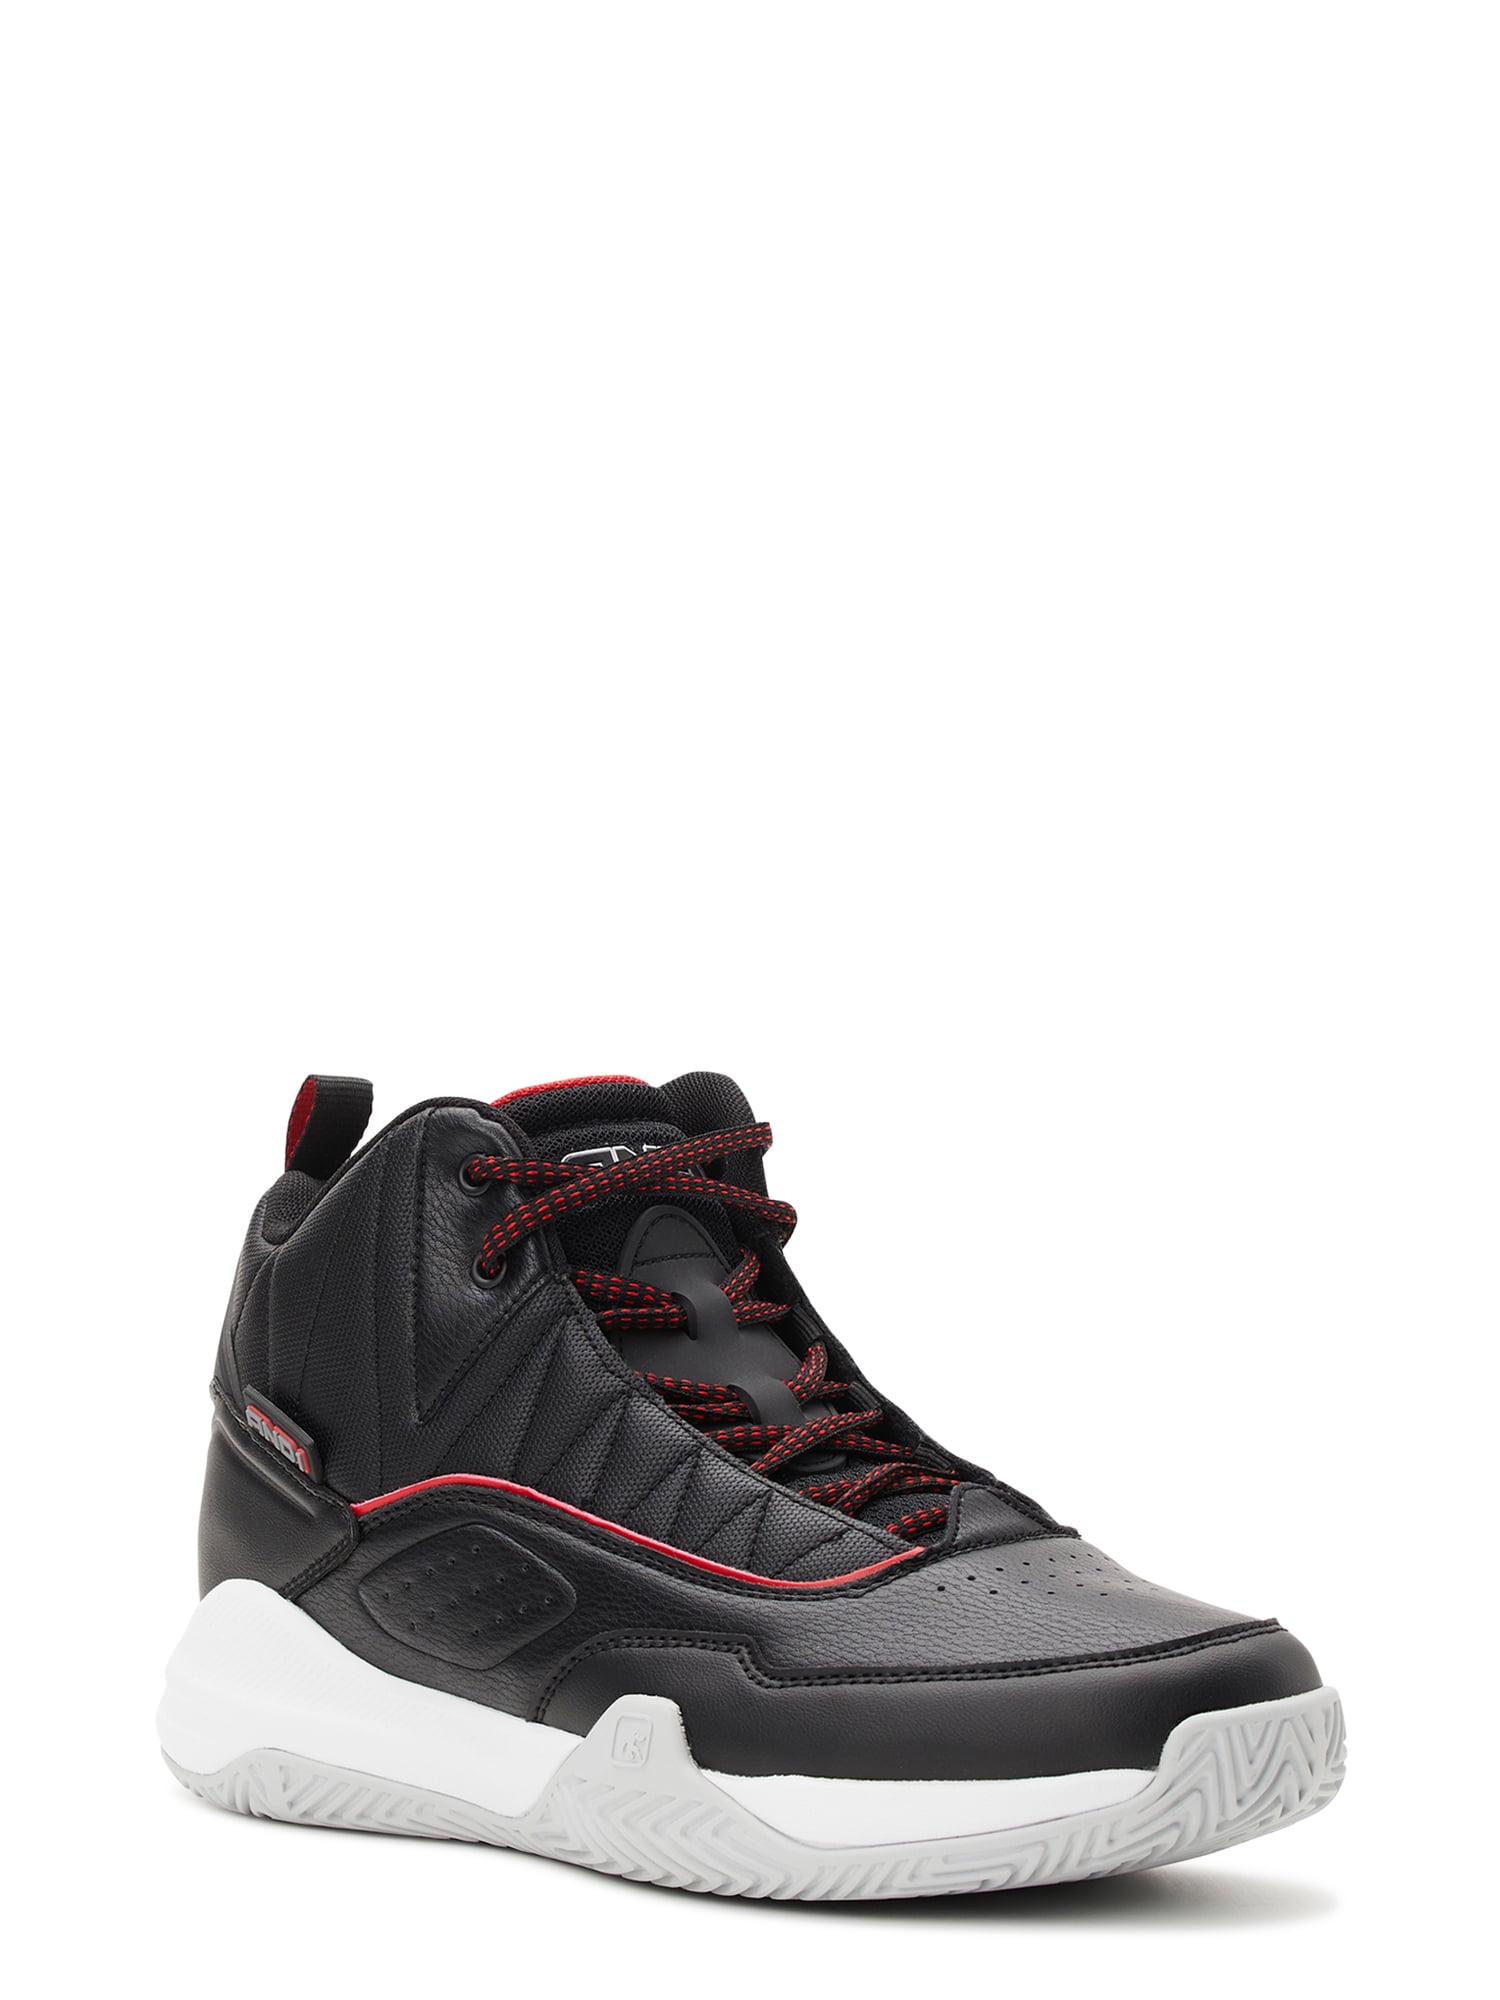 adidas Originals Streetball 3 Basketball Shoes| Finish Line